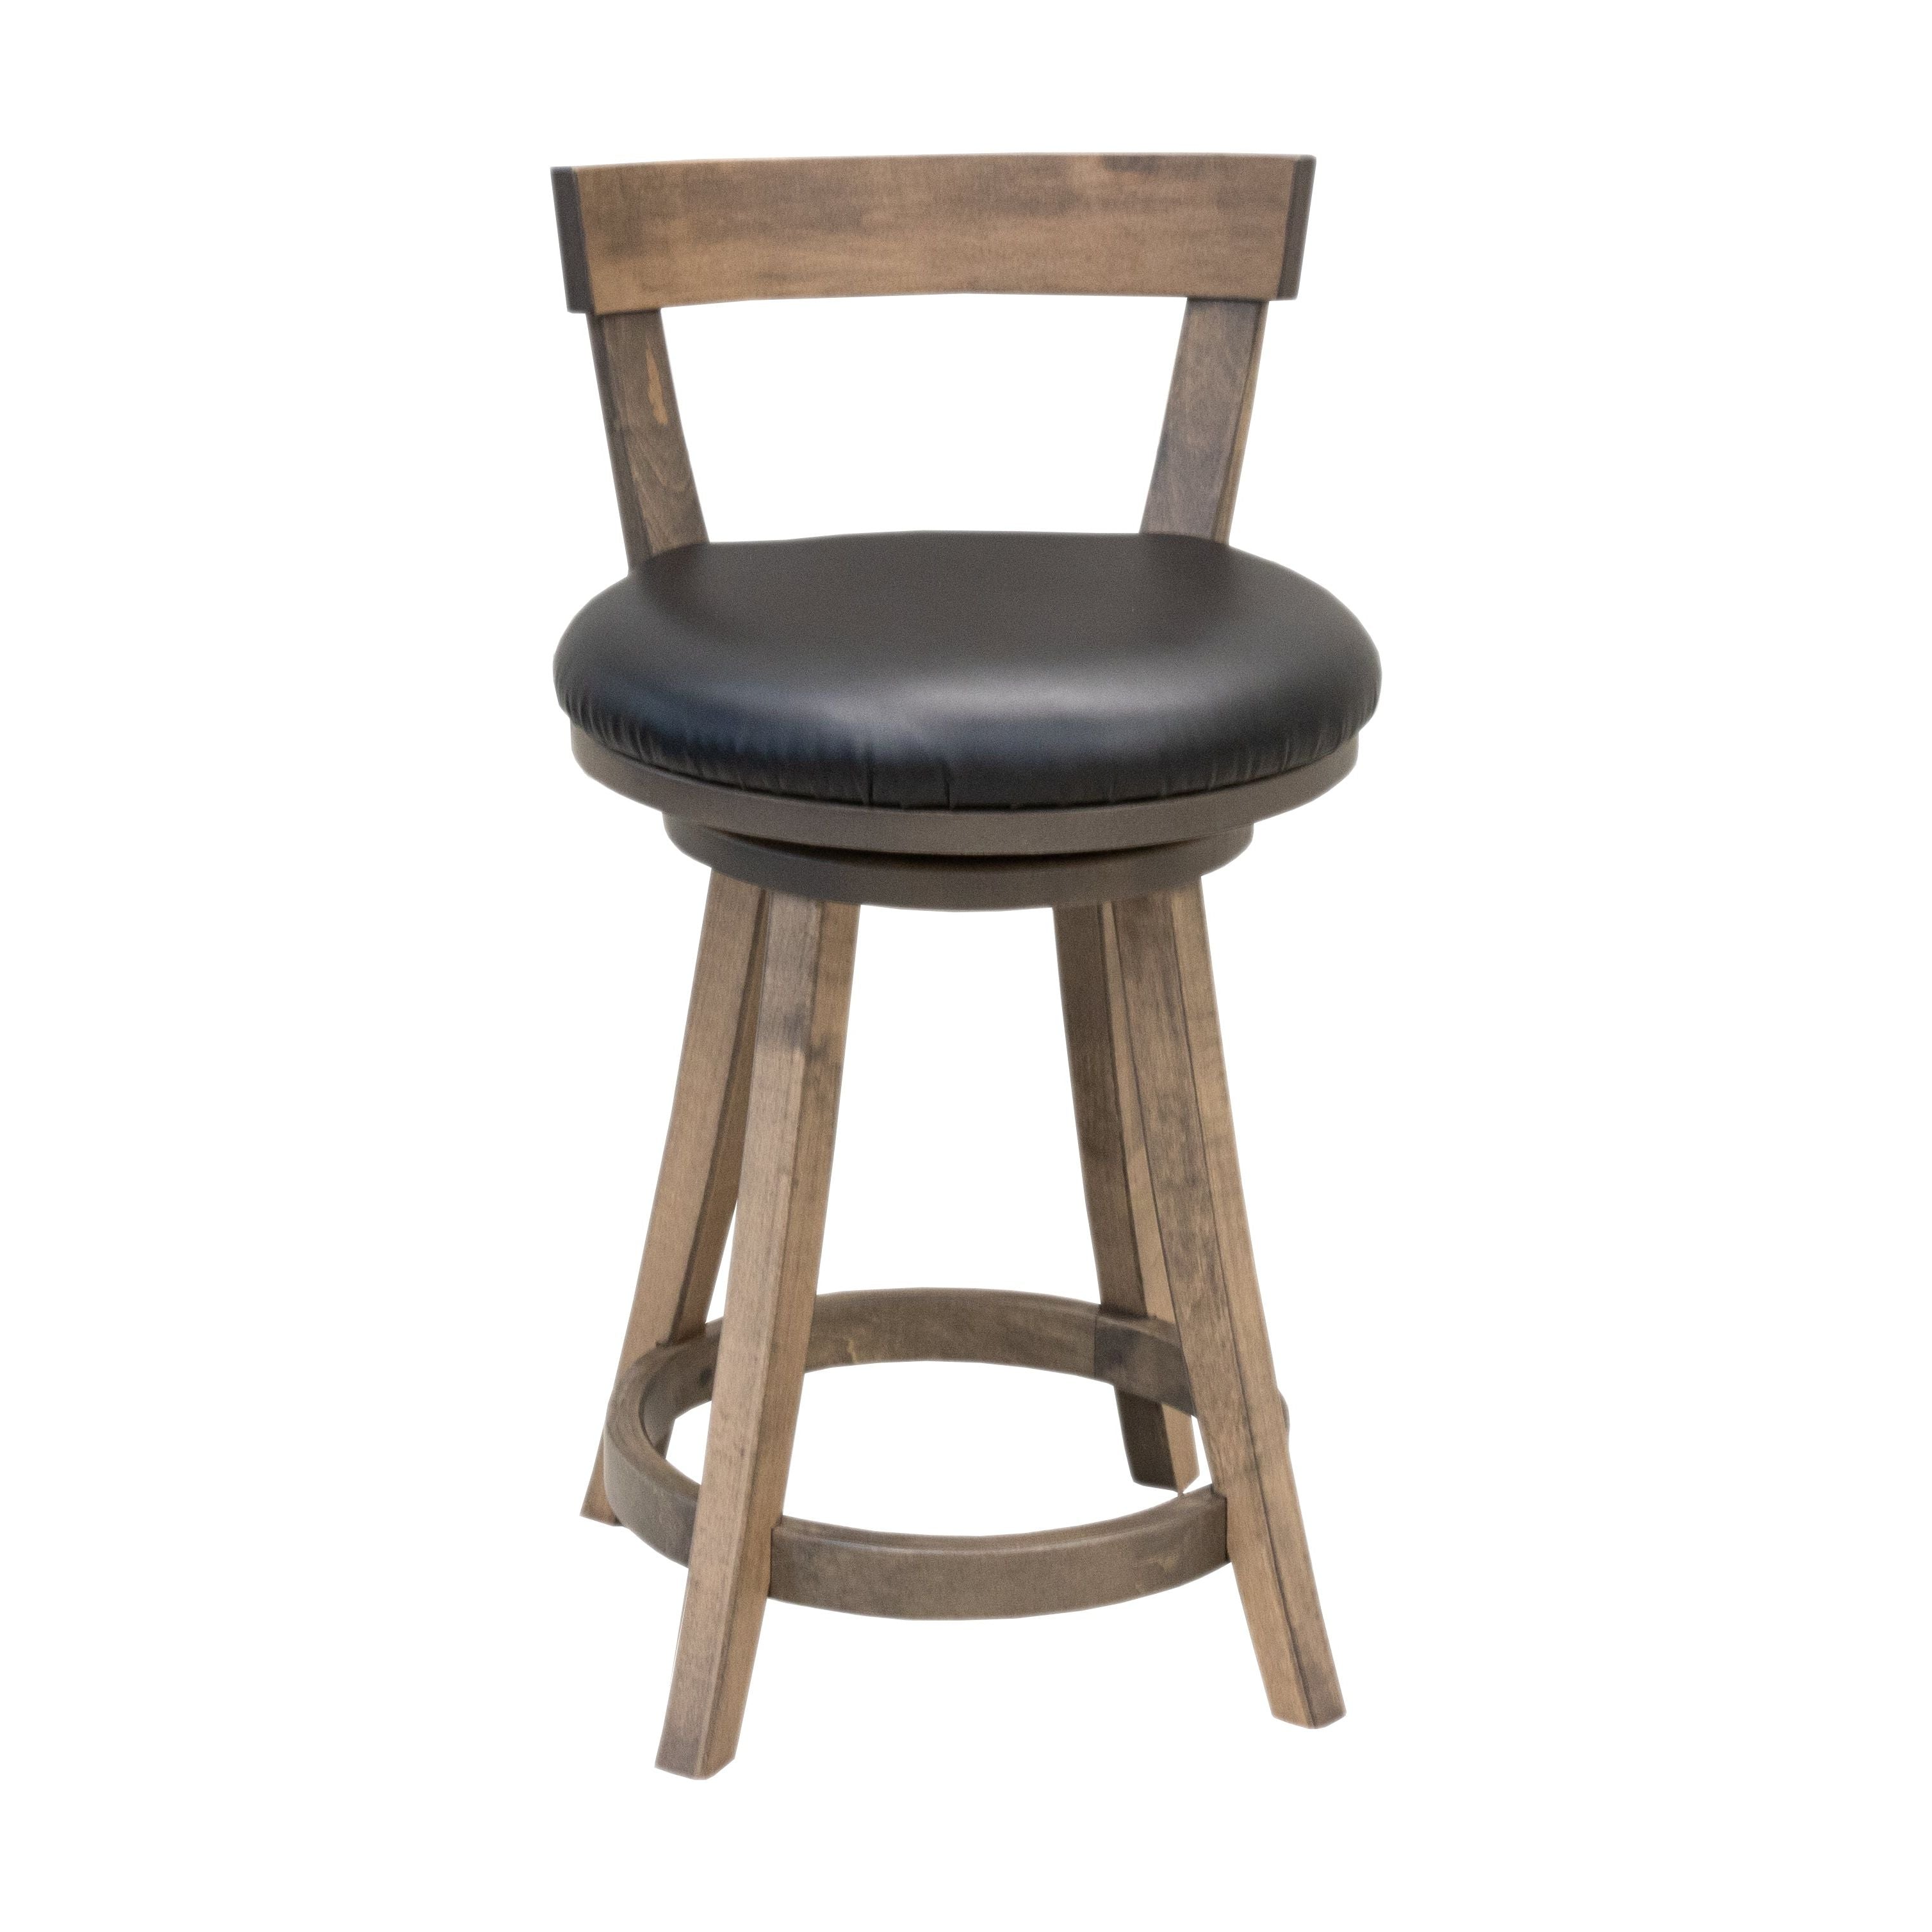 24" Turnstone Swivel Bar Chair with Fabric Seat